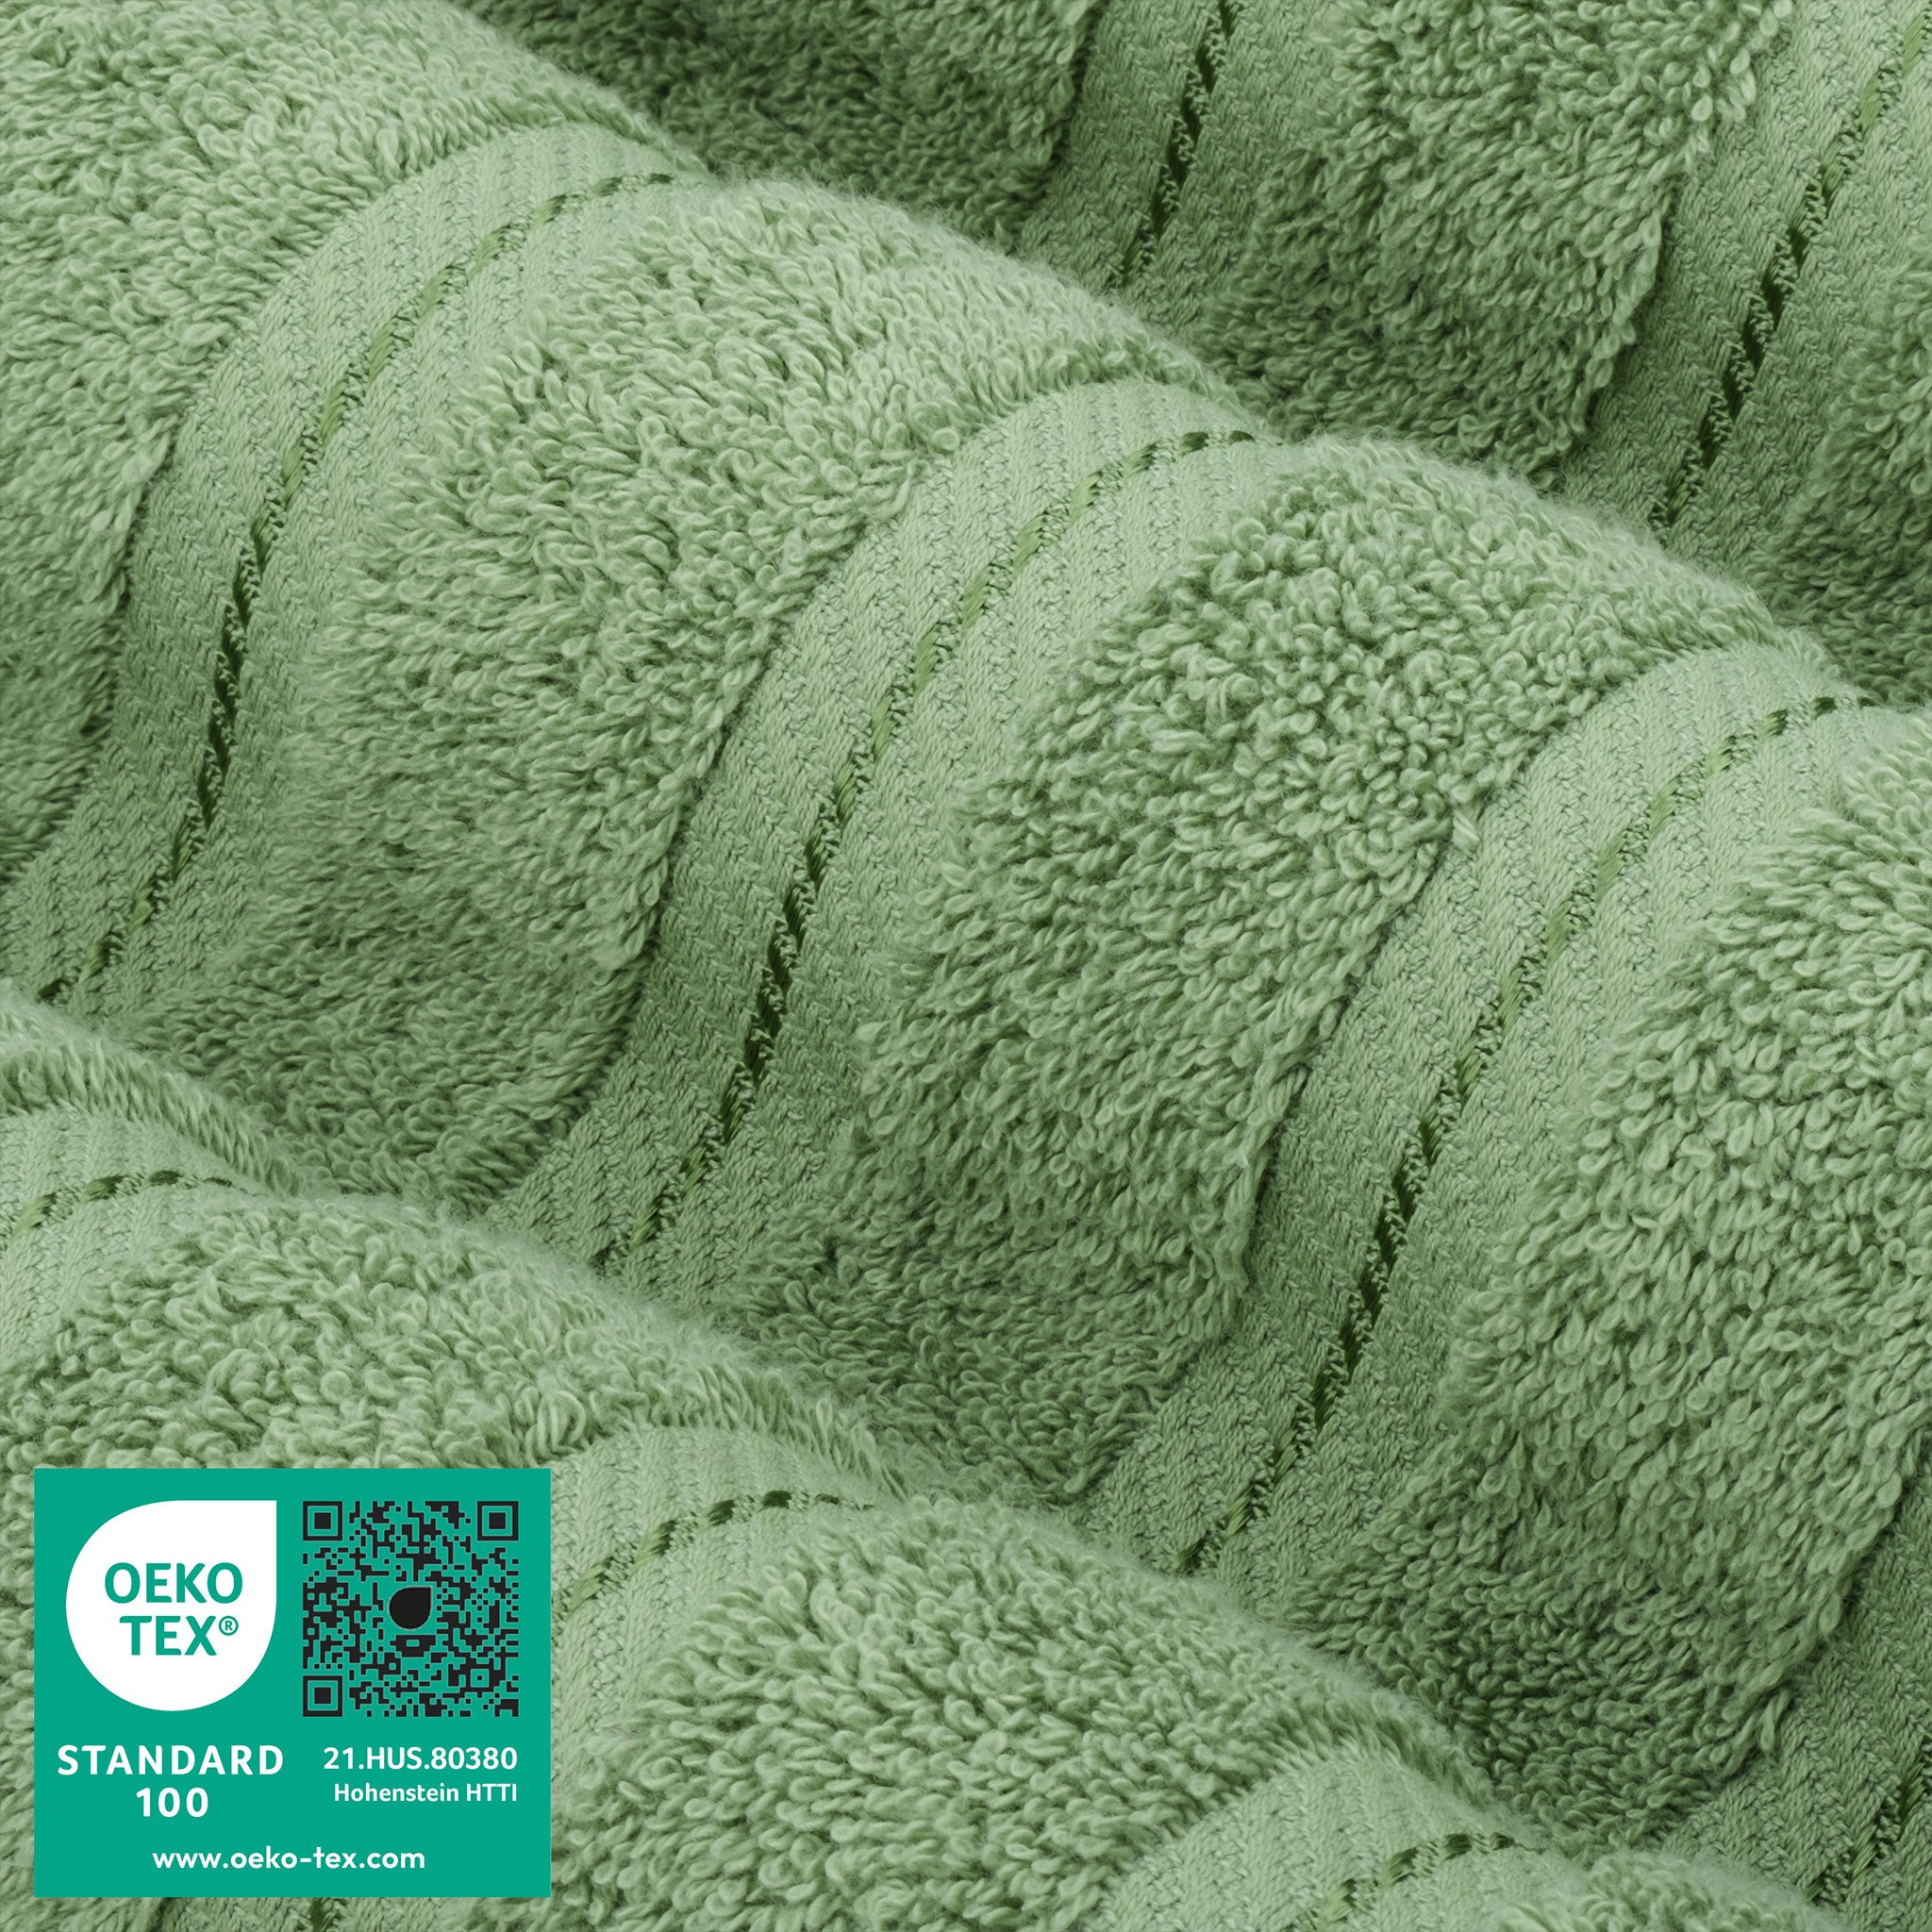 American Soft Linen - 35x70 Jumbo Bath Sheet Turkish Bath Towel - 16 Piece Case Pack - Sage-Green - 2